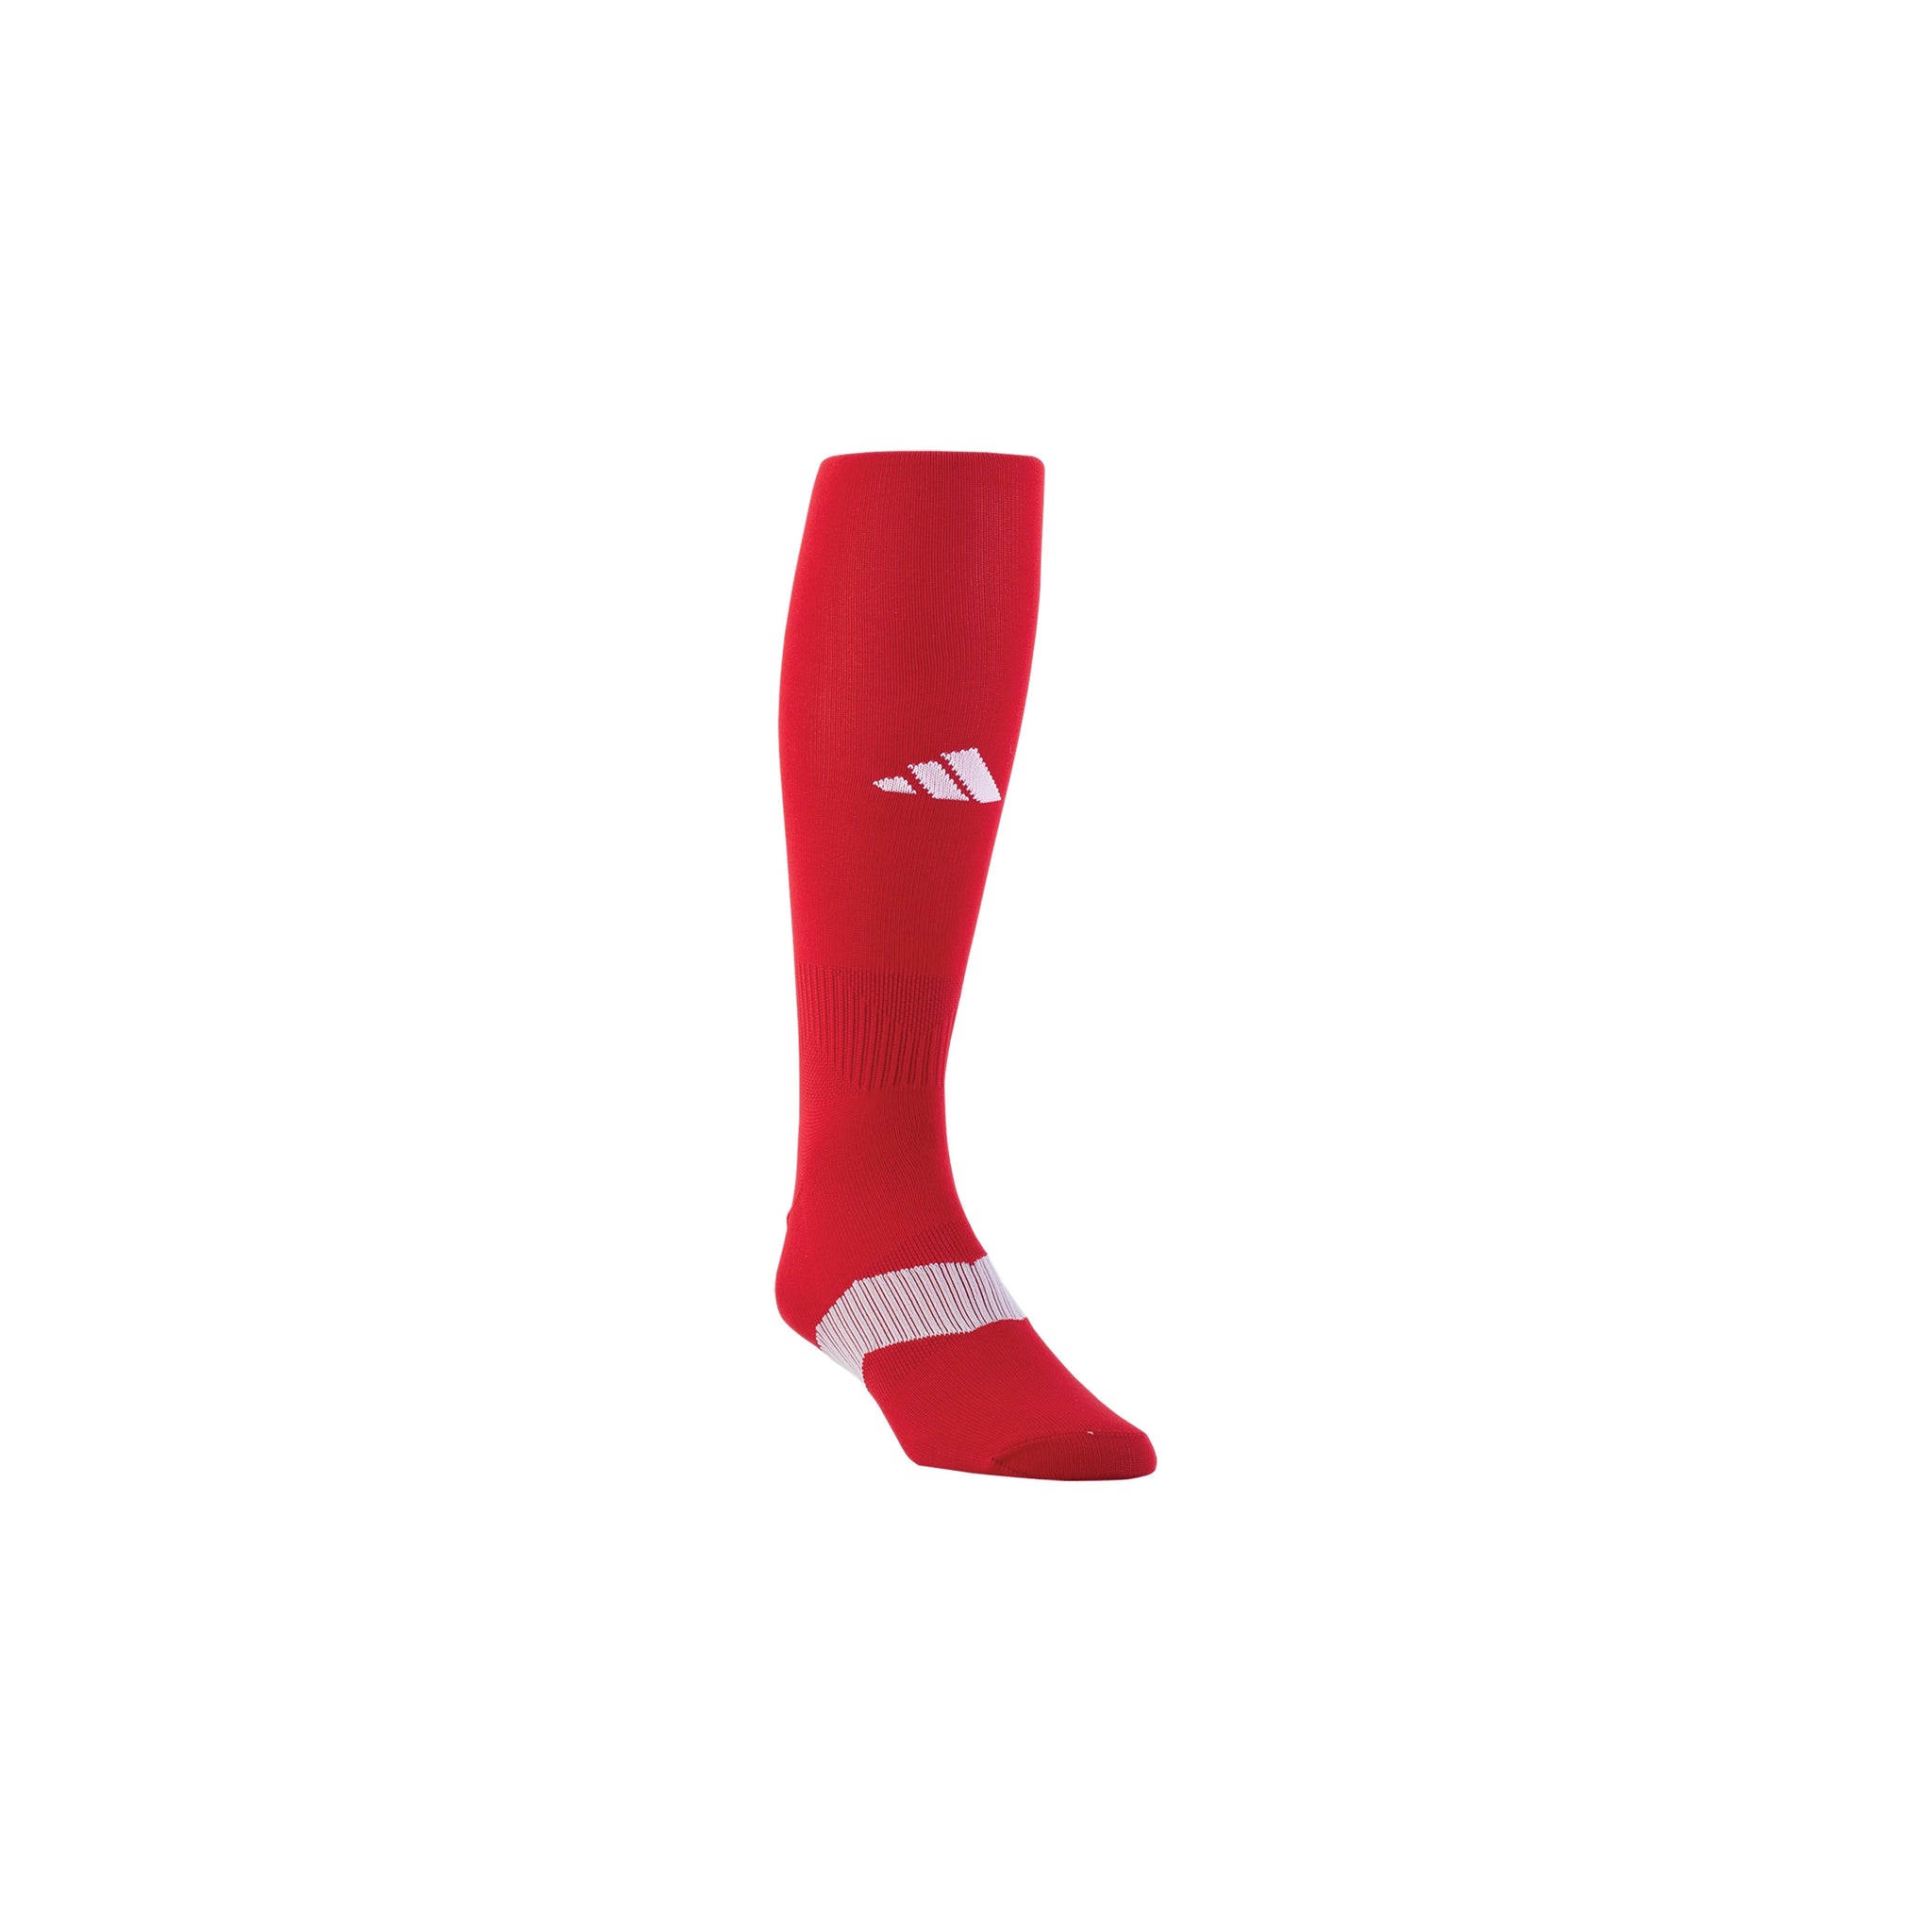 ADIDAS Metro VI Over The Calf Socks (Red)